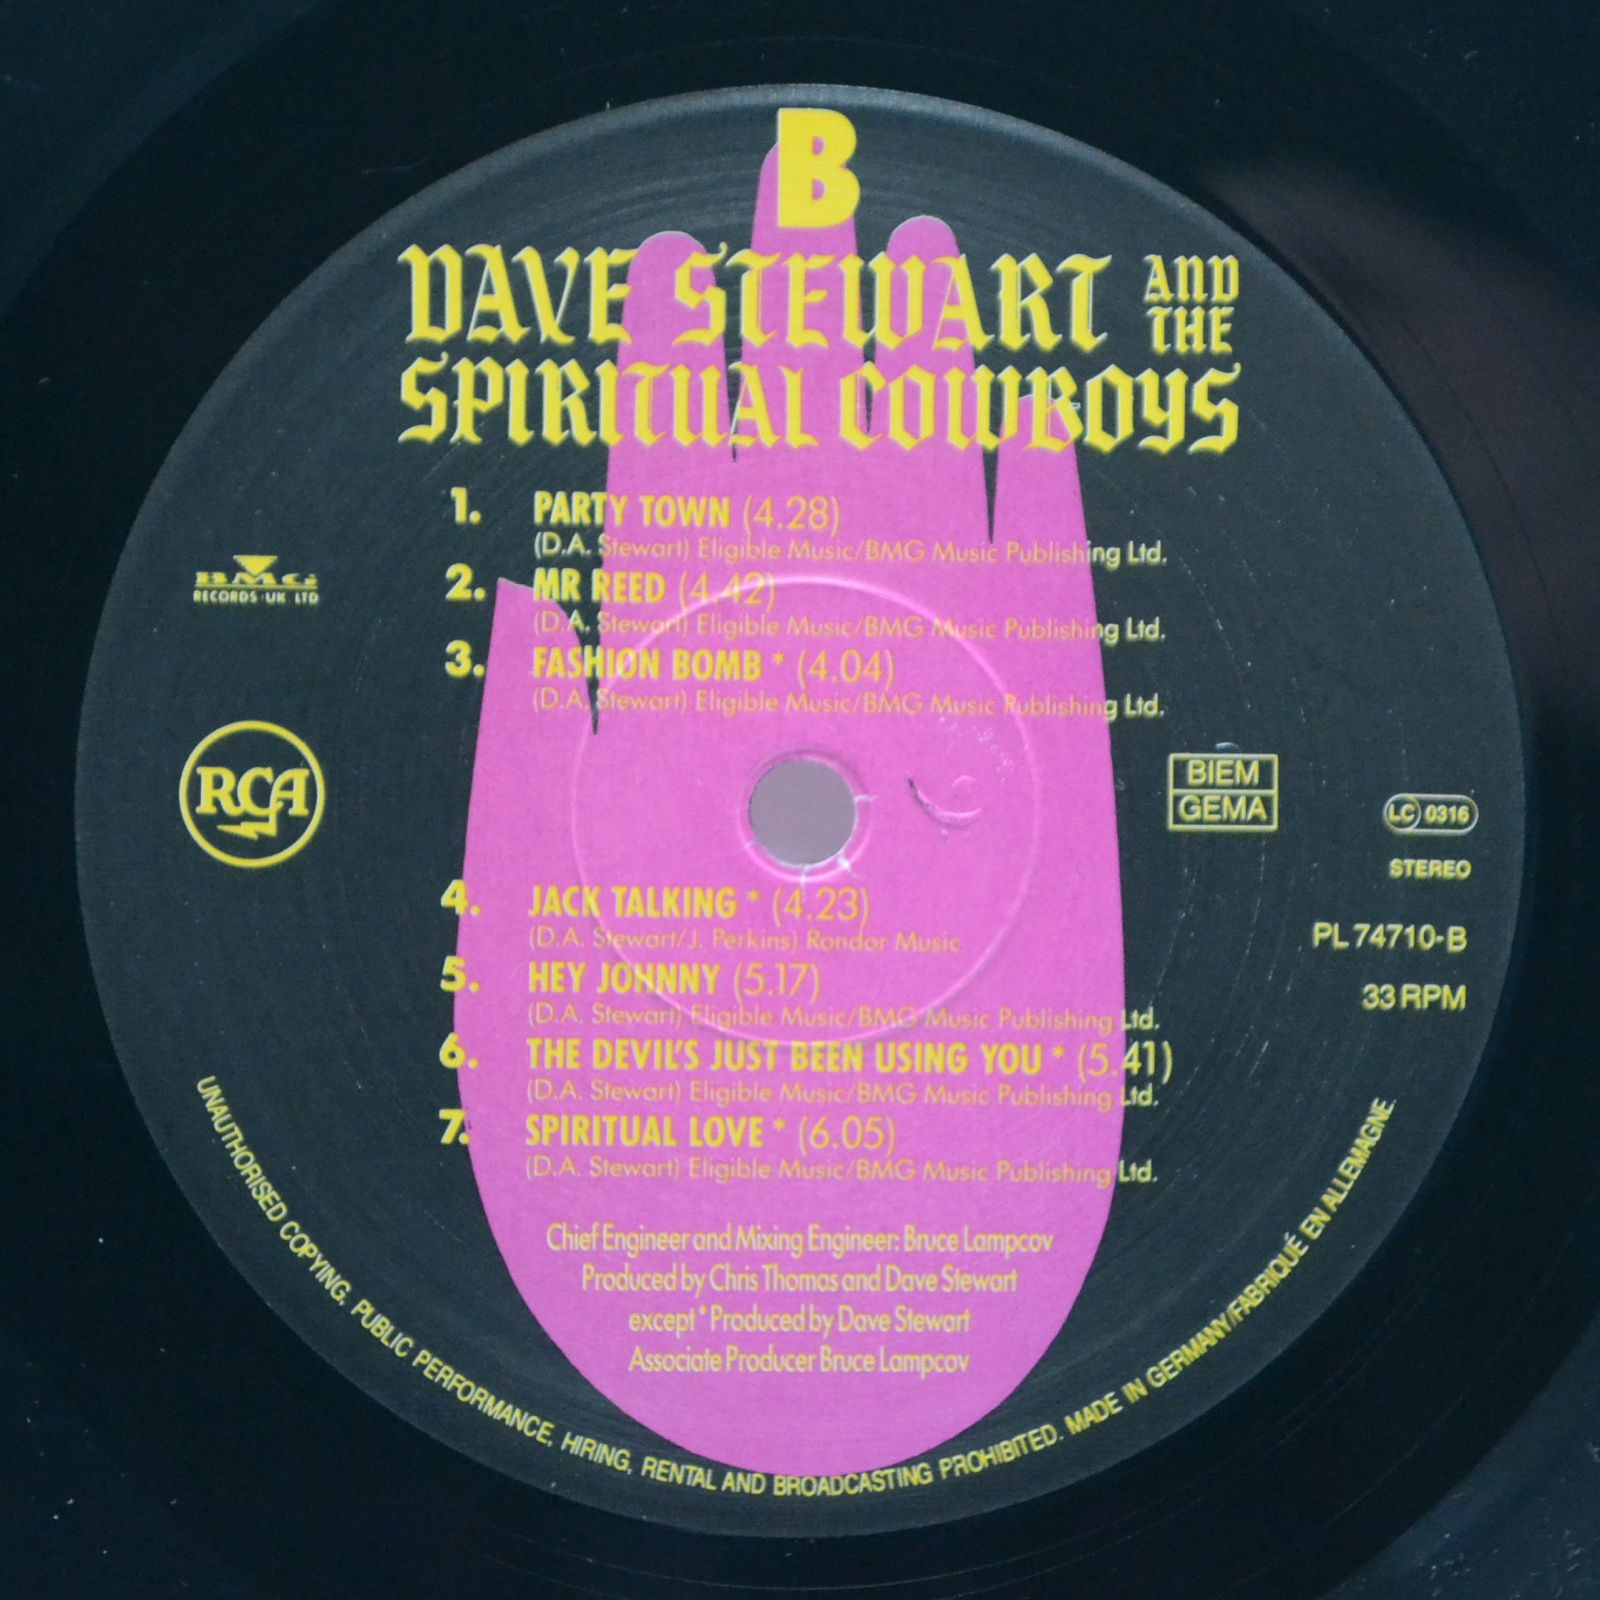 Dave Stewart And The Spiritual Cowboys — Dave Stewart And The Spiritual Cowboys, 1990